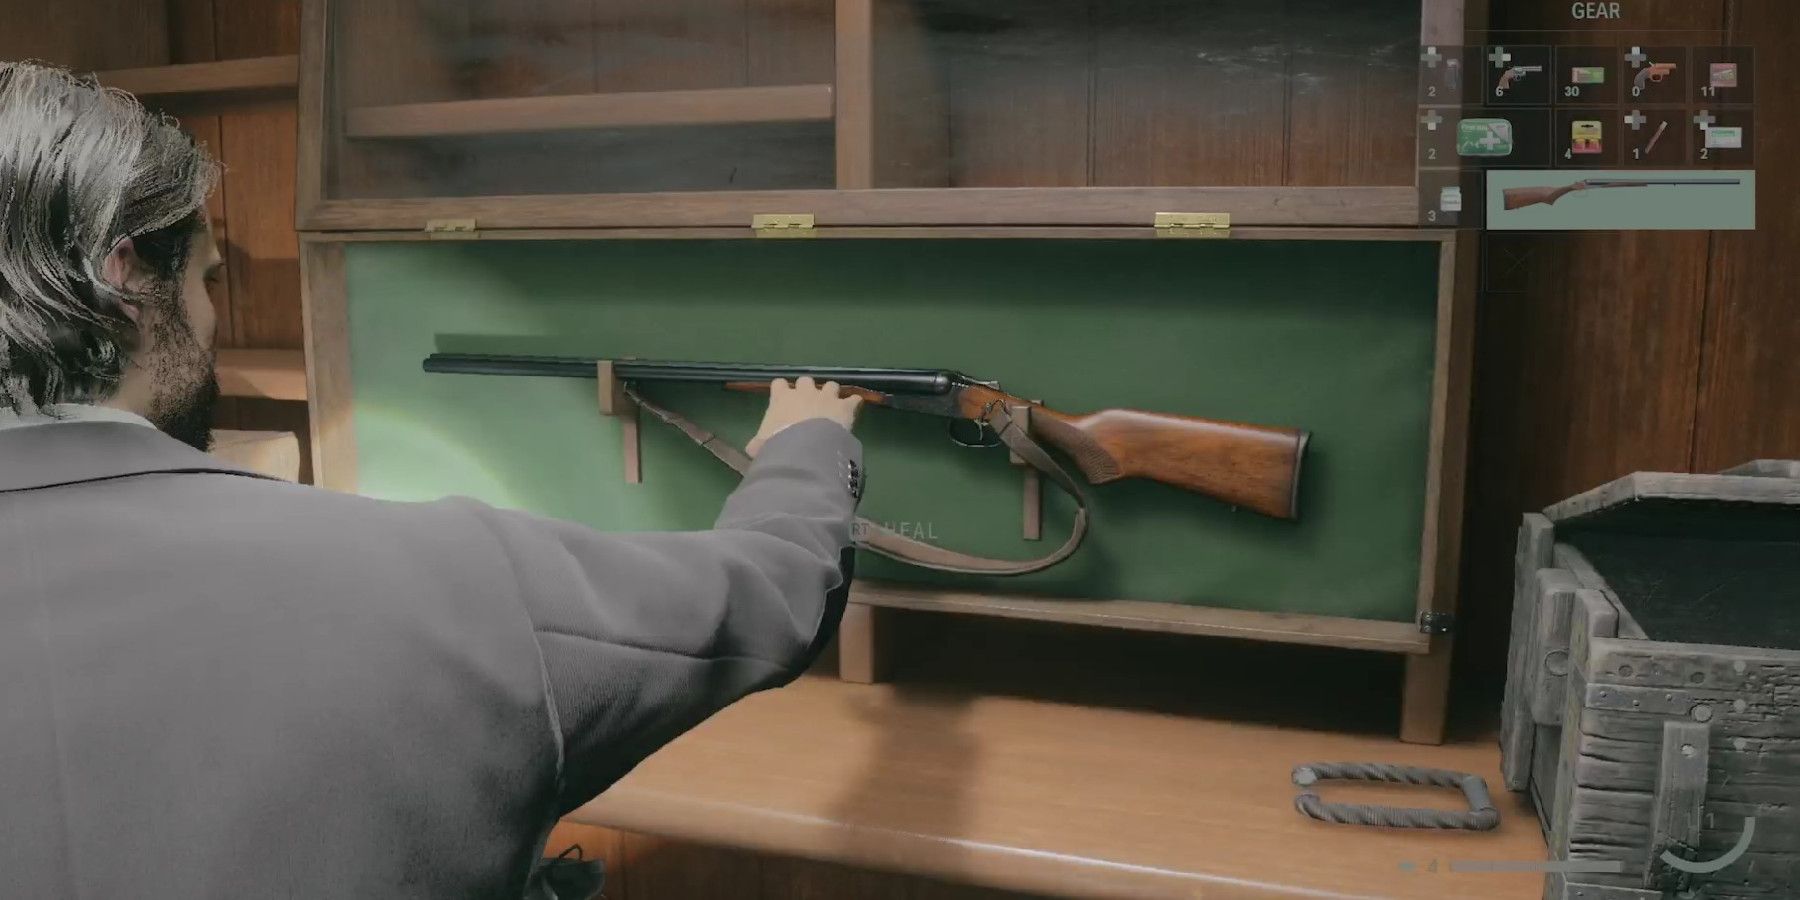 Alan Wake 2: How to Get the Sawed-Off Shotgun Code